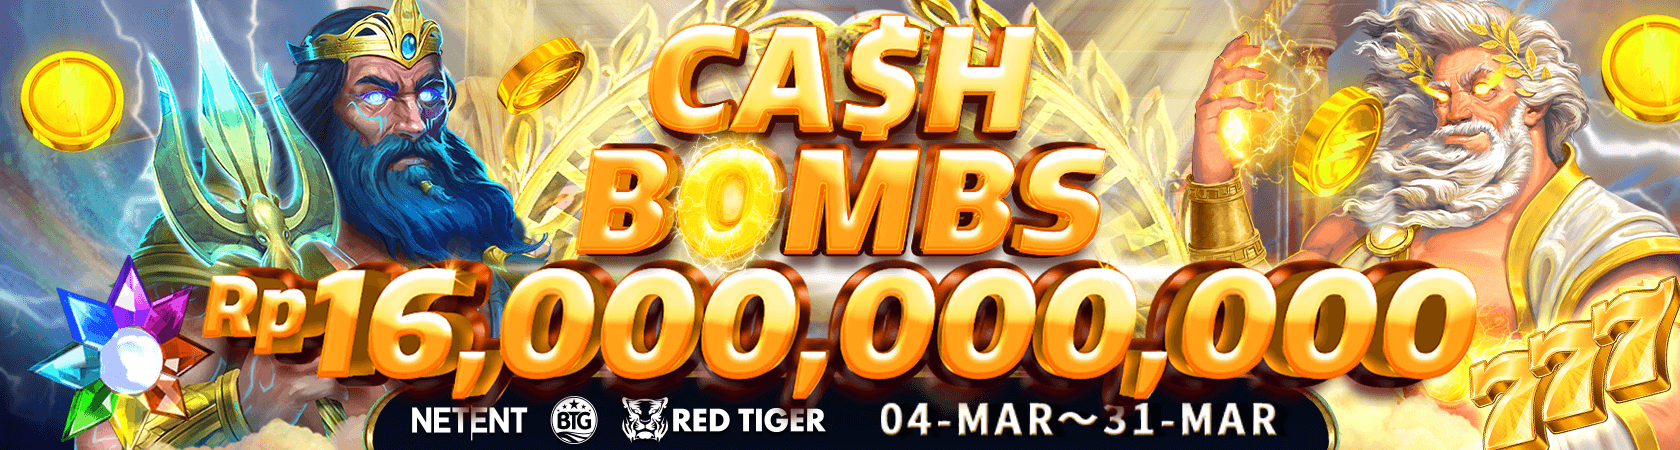 Cash Bombs_202403